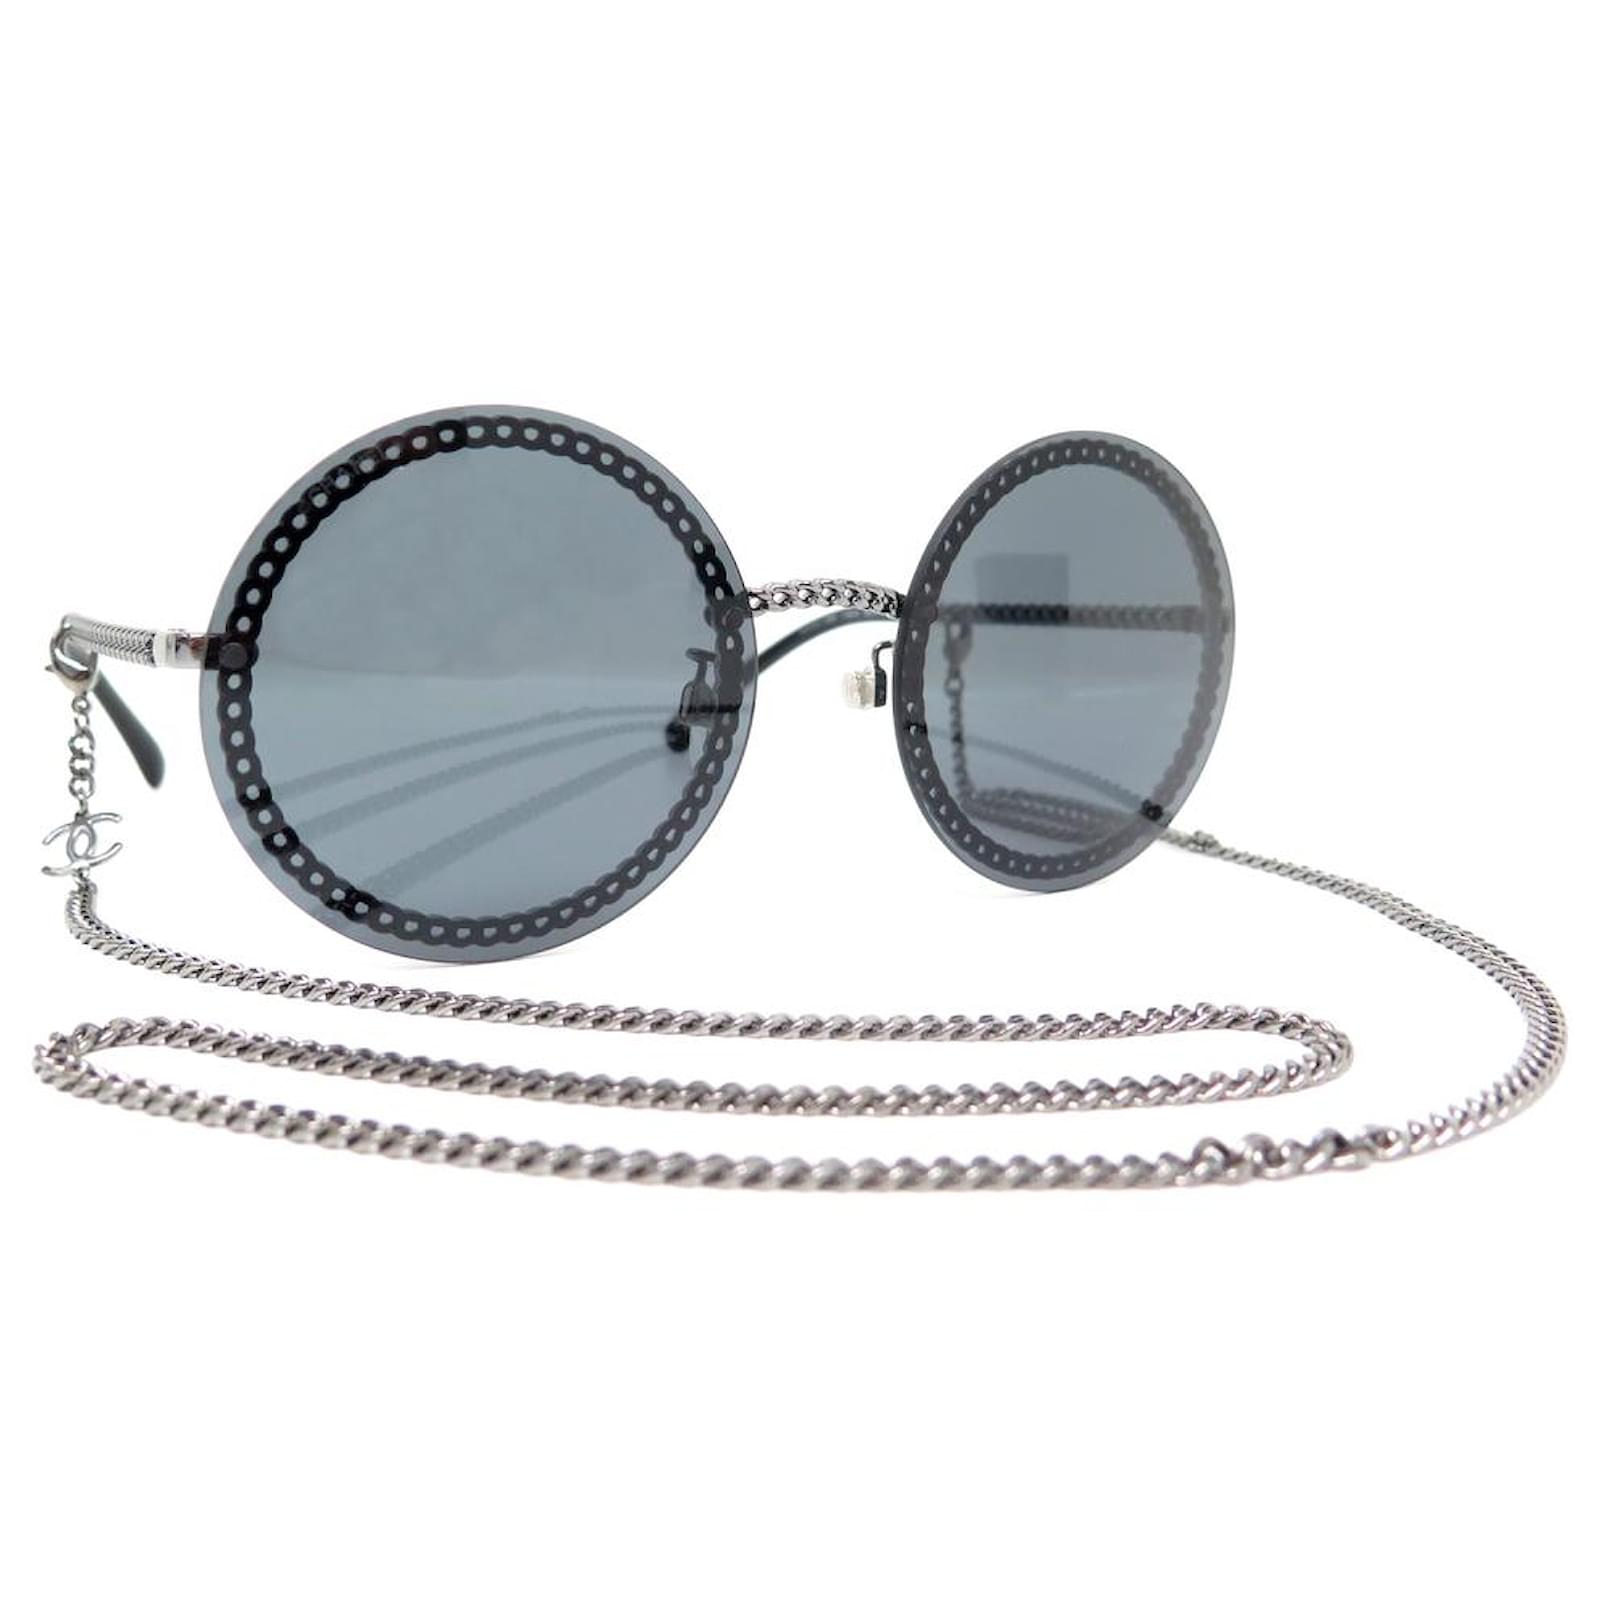 CHANEL - Round Sunglasses